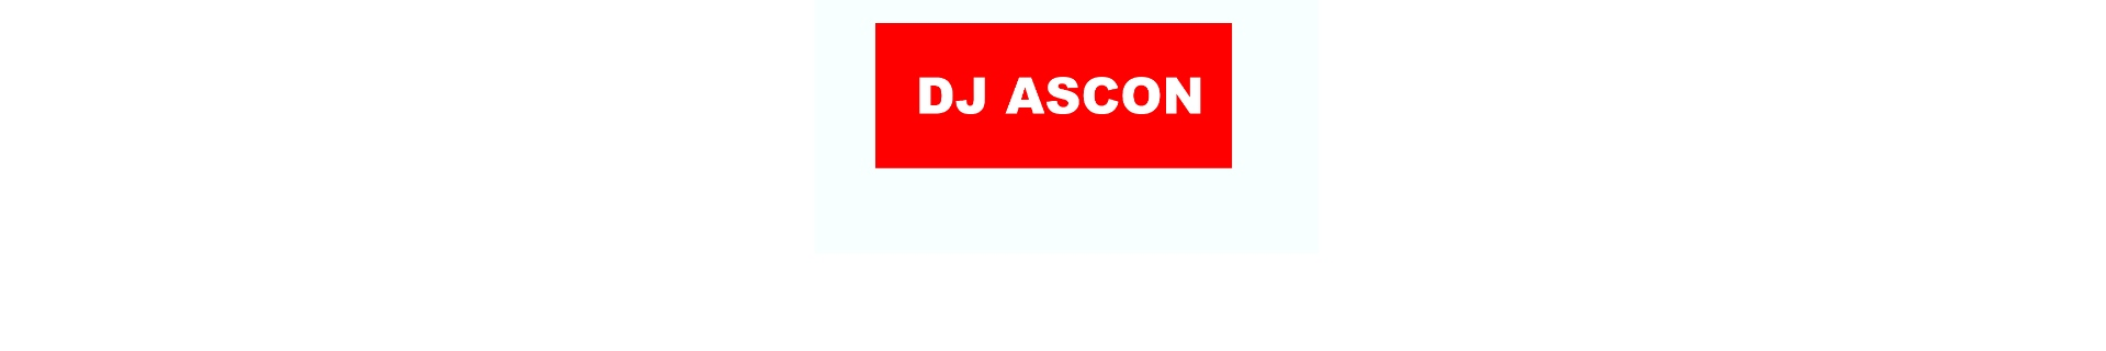 DJ Ascon